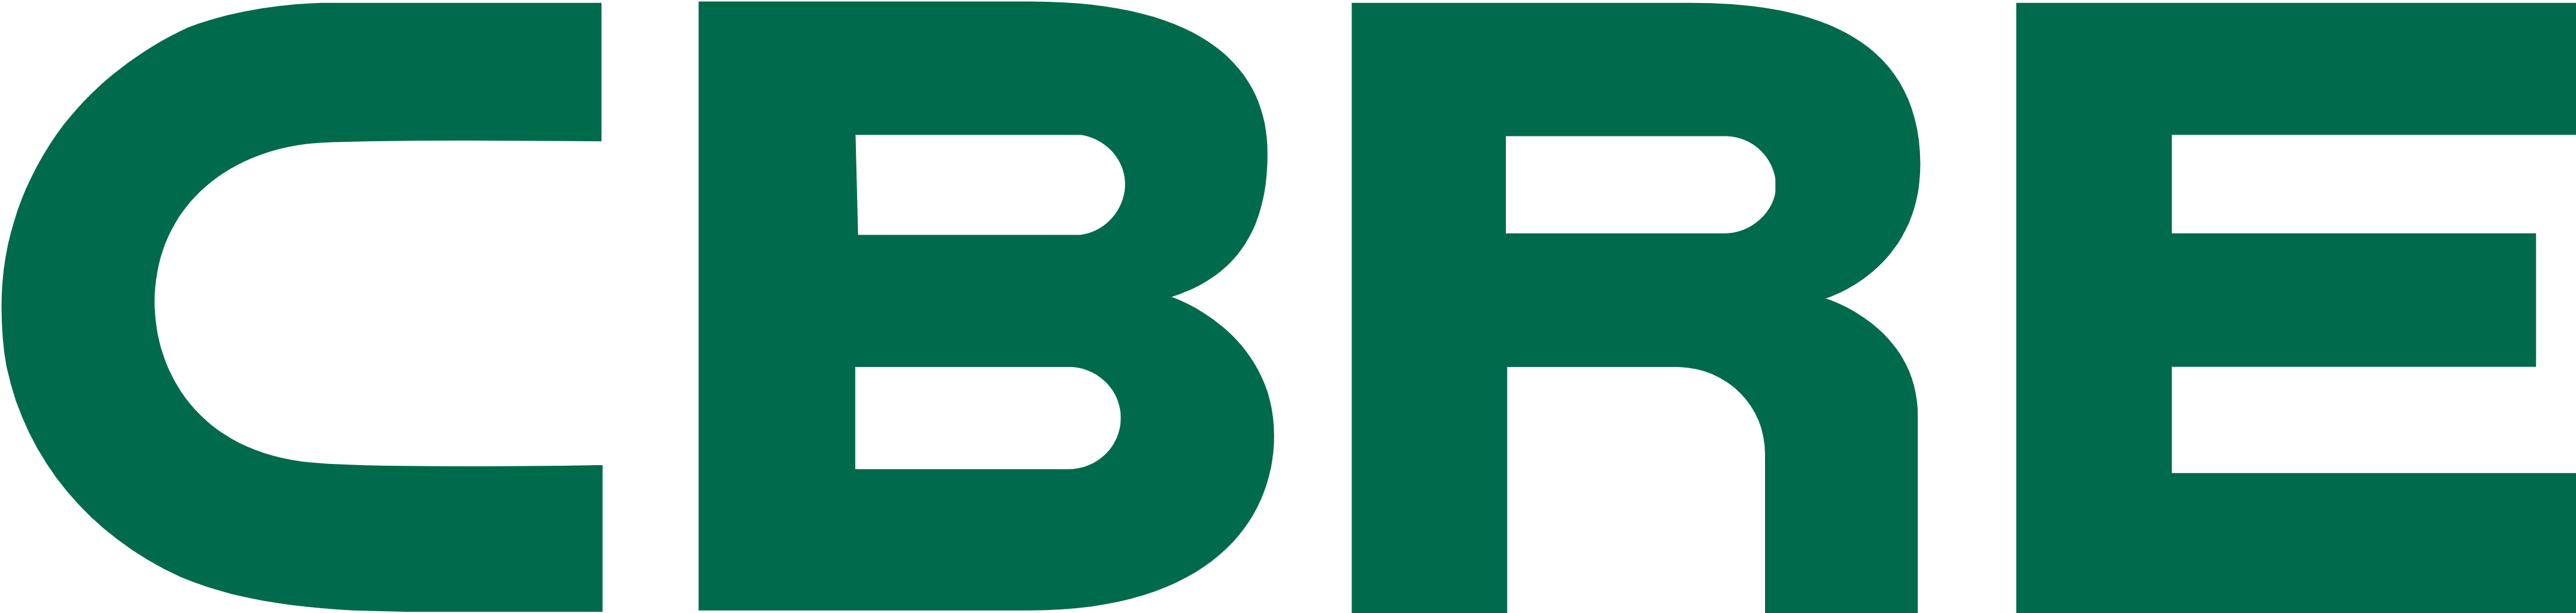 CBRE Group
 logo (transparent PNG)